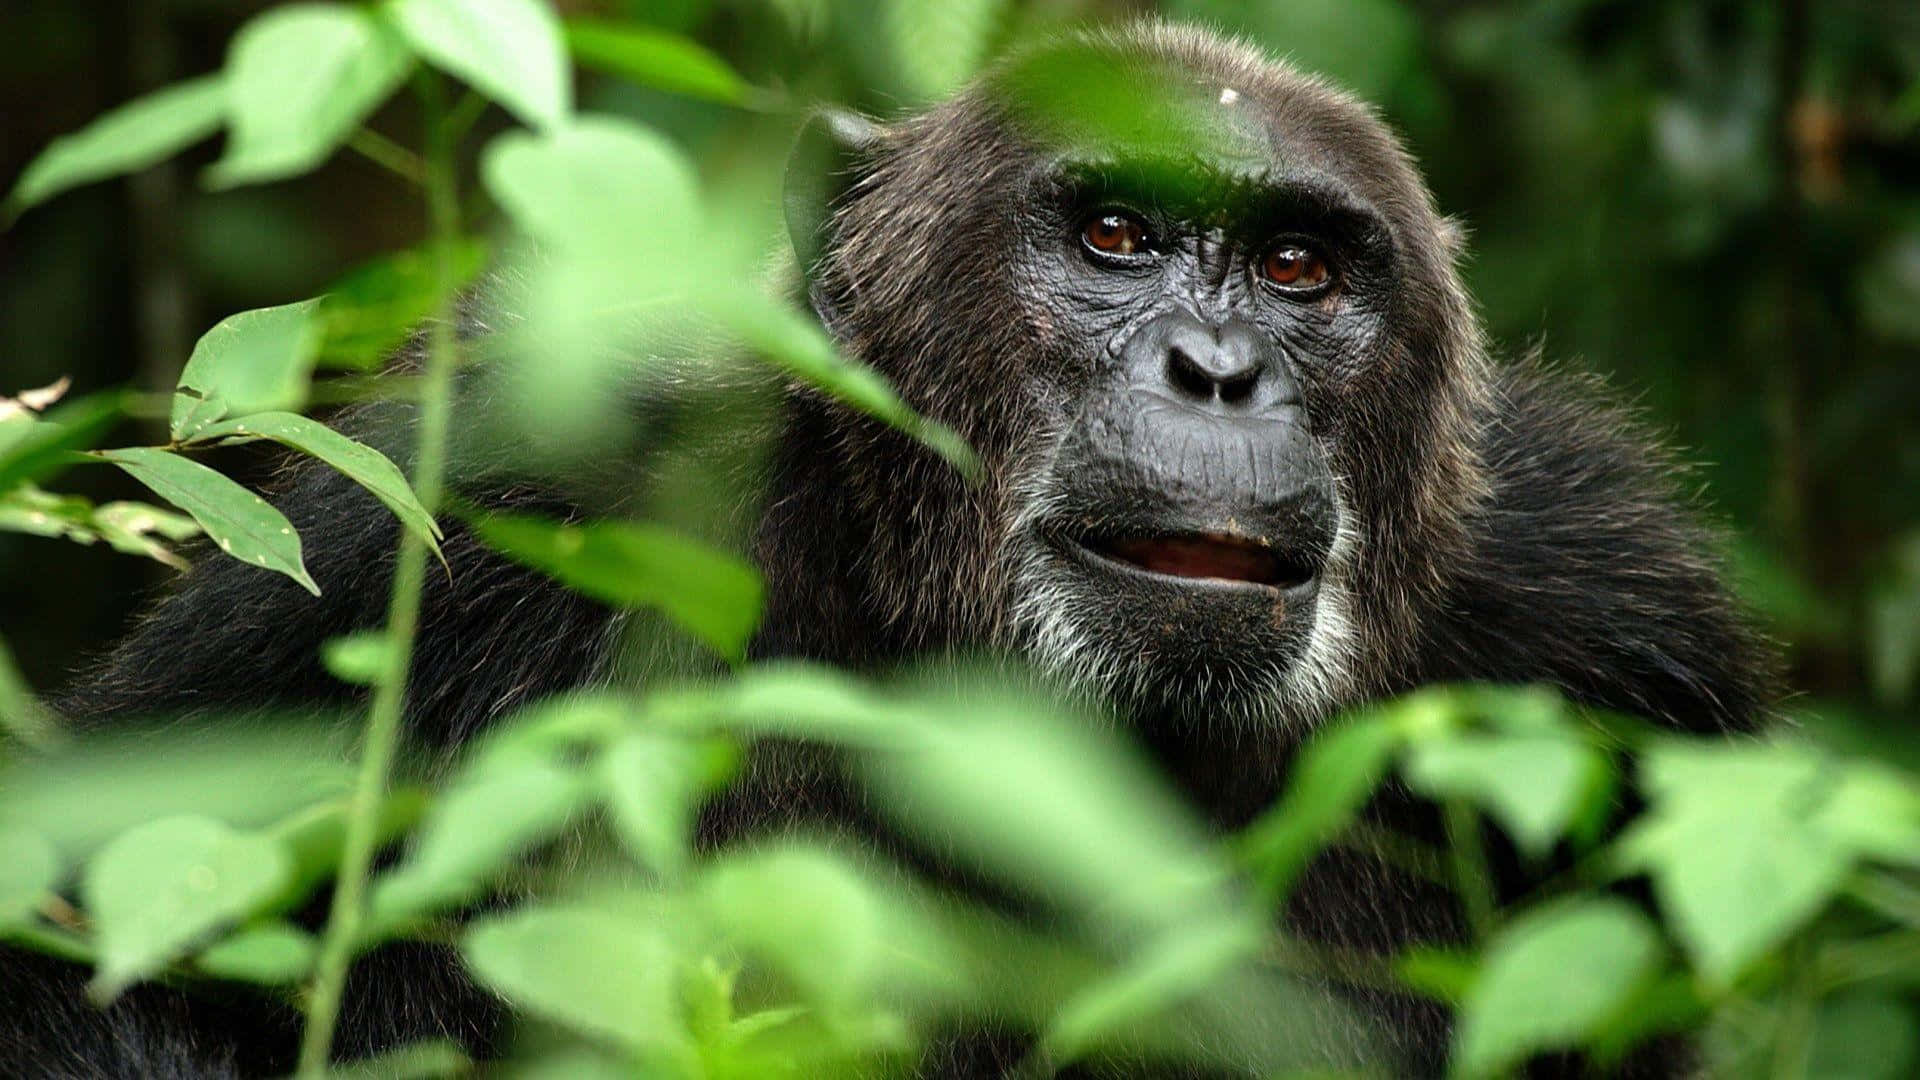 Imagende Un Mono Negro En La Jungla De Chimpancés.